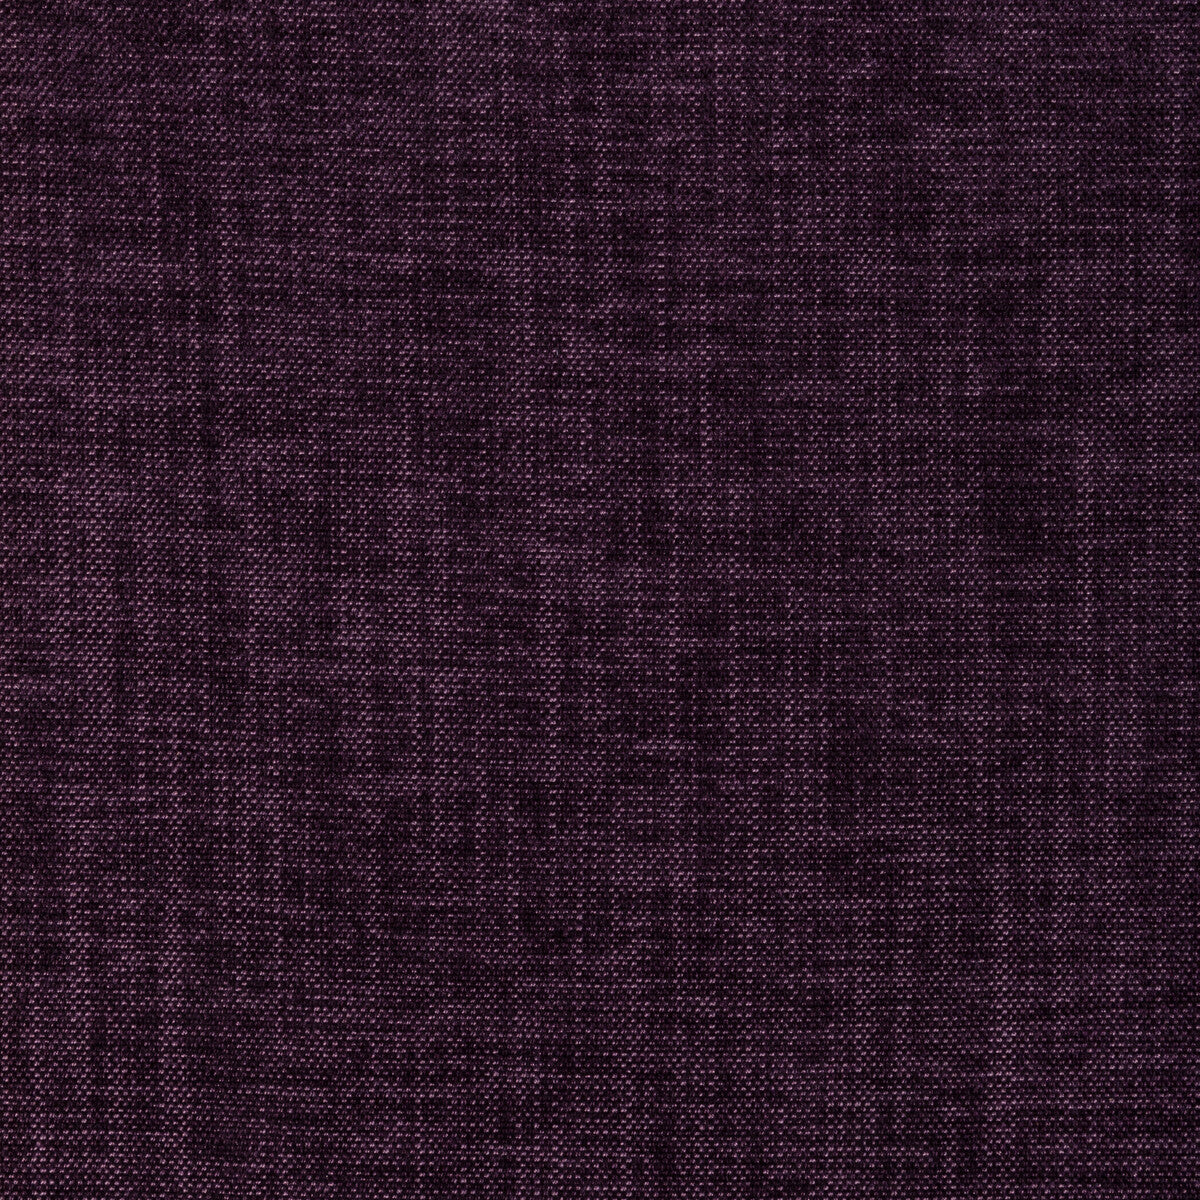 Kravet Smart fabric in 36650-10 color - pattern 36650.10.0 - by Kravet Smart in the Performance Kravetarmor collection